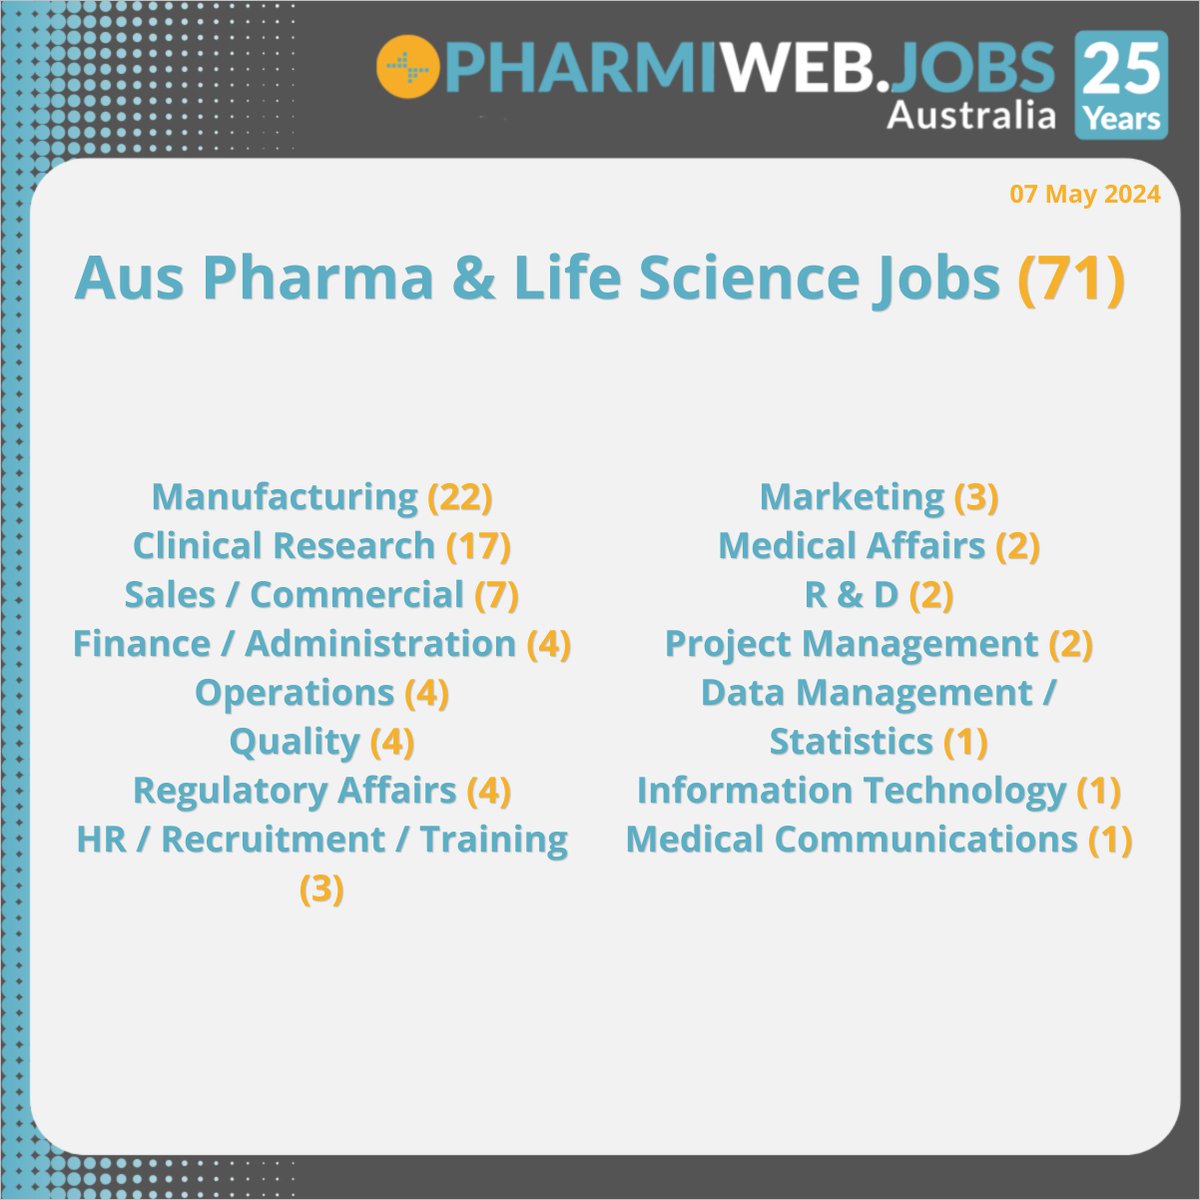 71 Pharma & Life Science Jobs Today
Search Now - phrmwb.com/3ycdyST

Register & Upload Your CV Now! phrmwb.com/3JSndAM

#Pharma #pharmaceuticals #Biotech #ClinicalResearch #LifeSciences #MedicalDevices #Biotechnology #PharmaJobs #healthcare #jobs #Australia #PharmiWeb